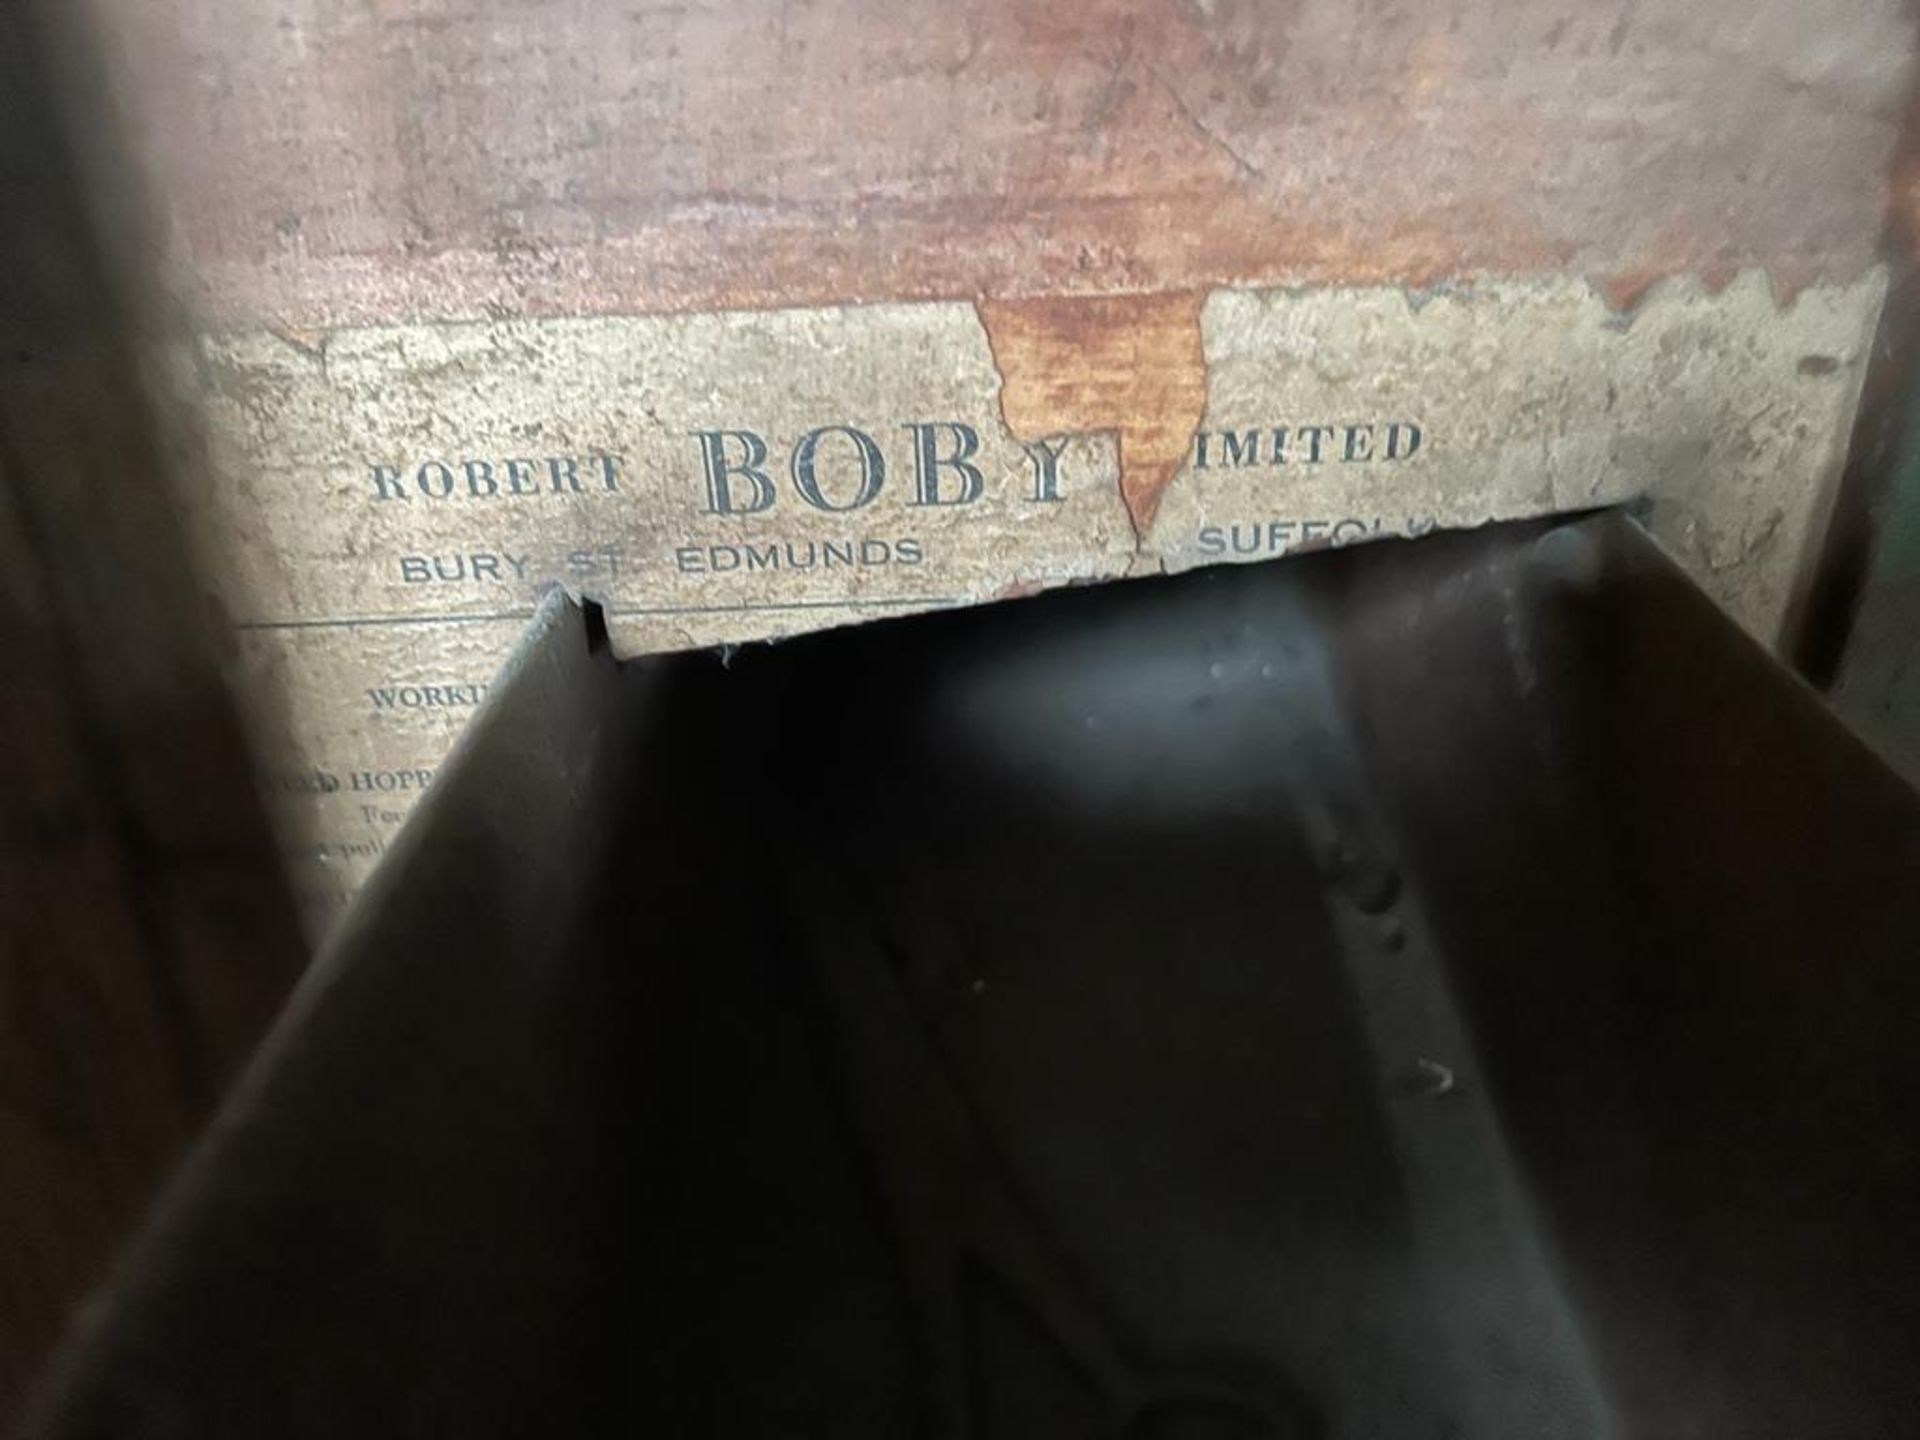 A ROBERT BOBY 'BURY ST EDMONDS' GRAIN MIXER CLEANER WITH DCE UNIMASTER DRIER DRUM 91"LONG 70" - Image 9 of 12